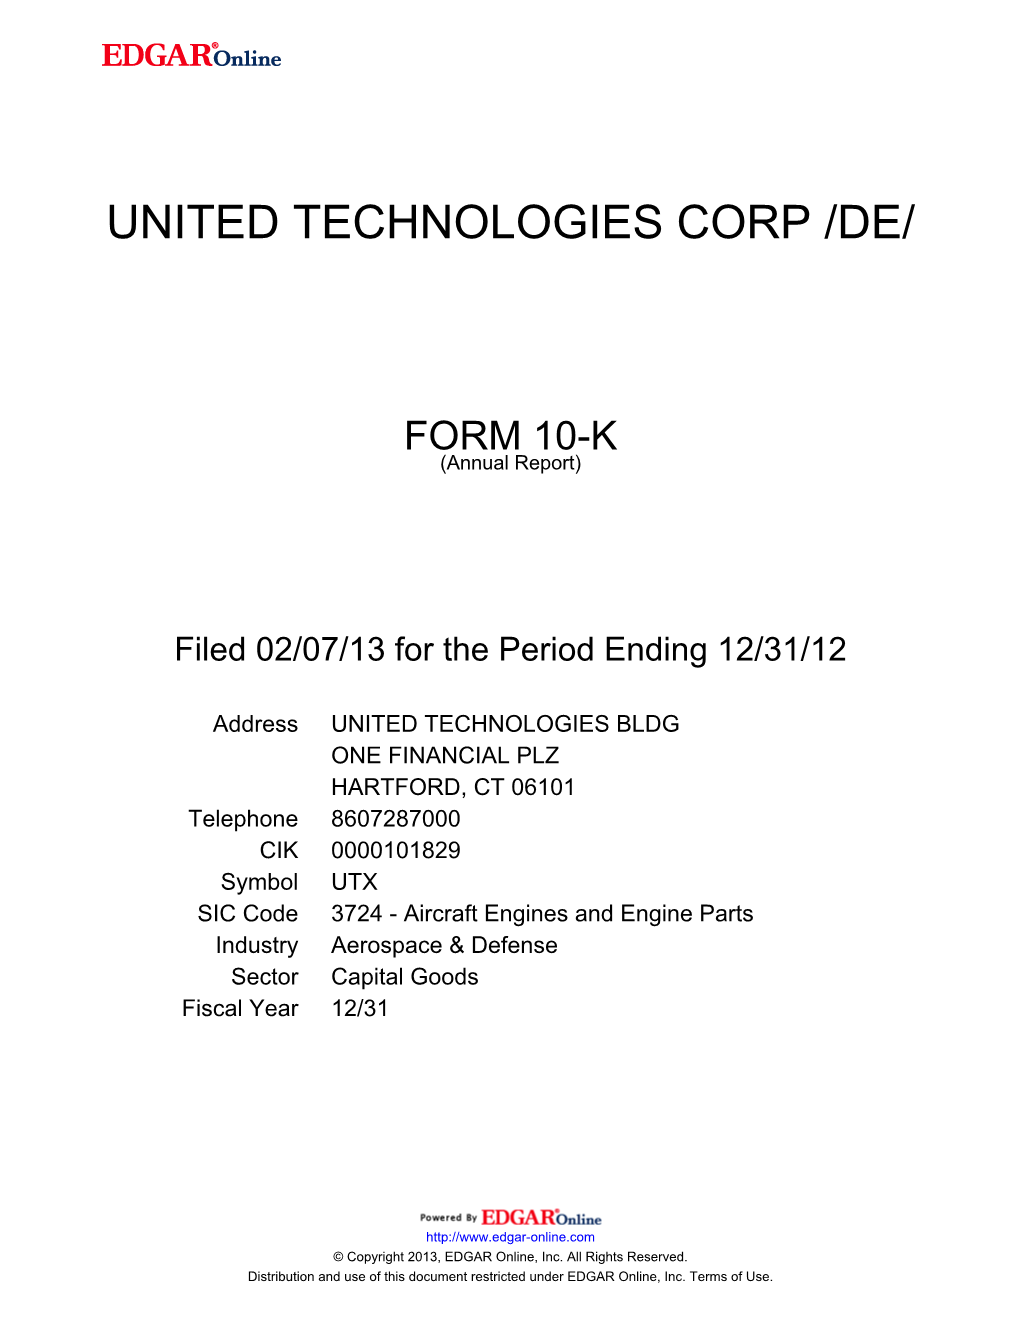 United Technologies Corp /De